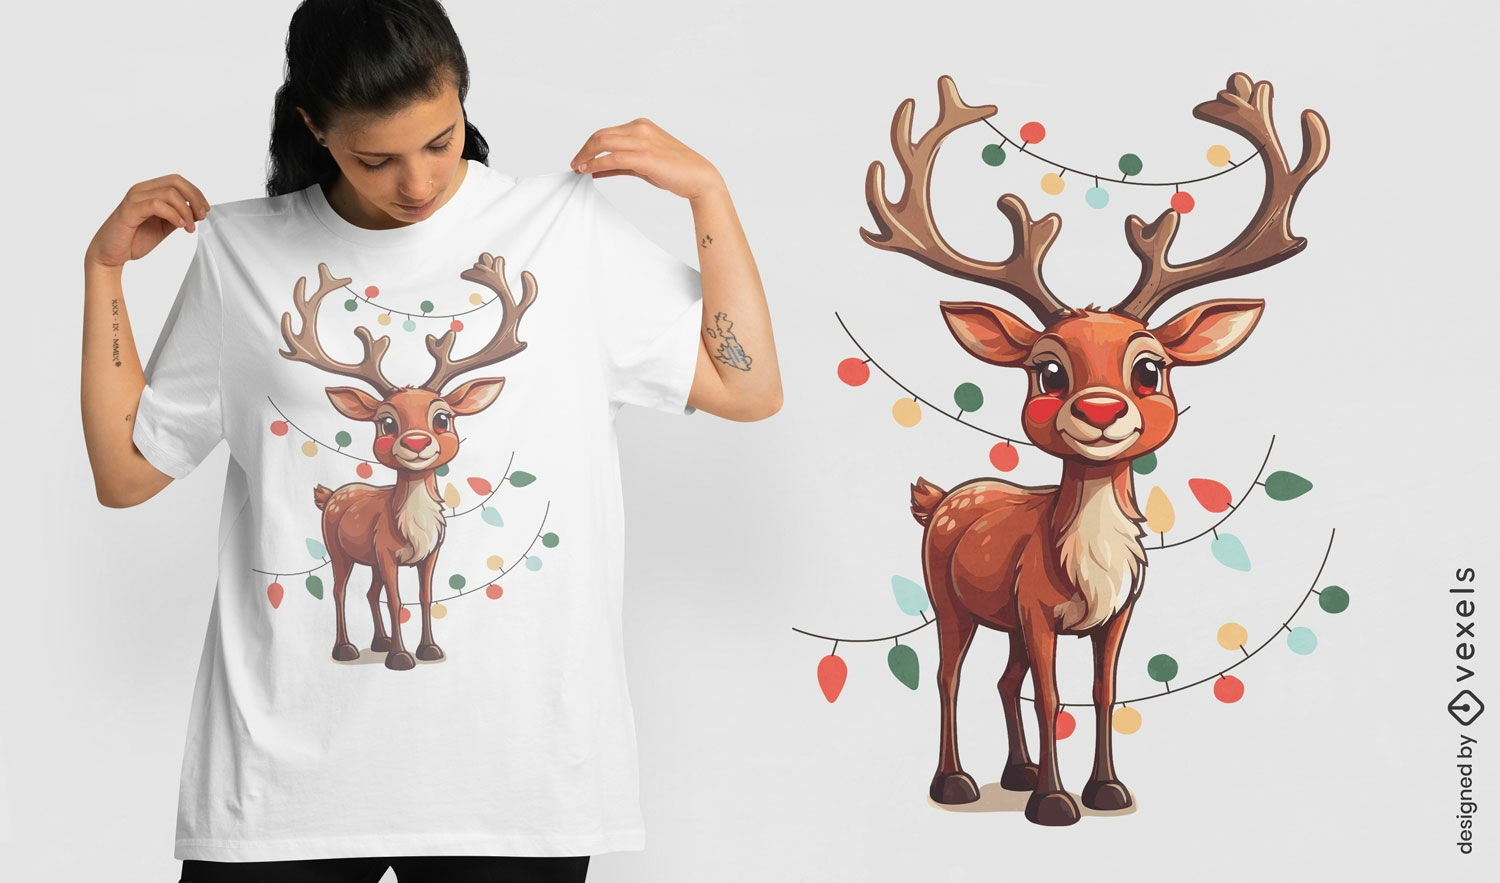 Festive Rudolph t-shirt design